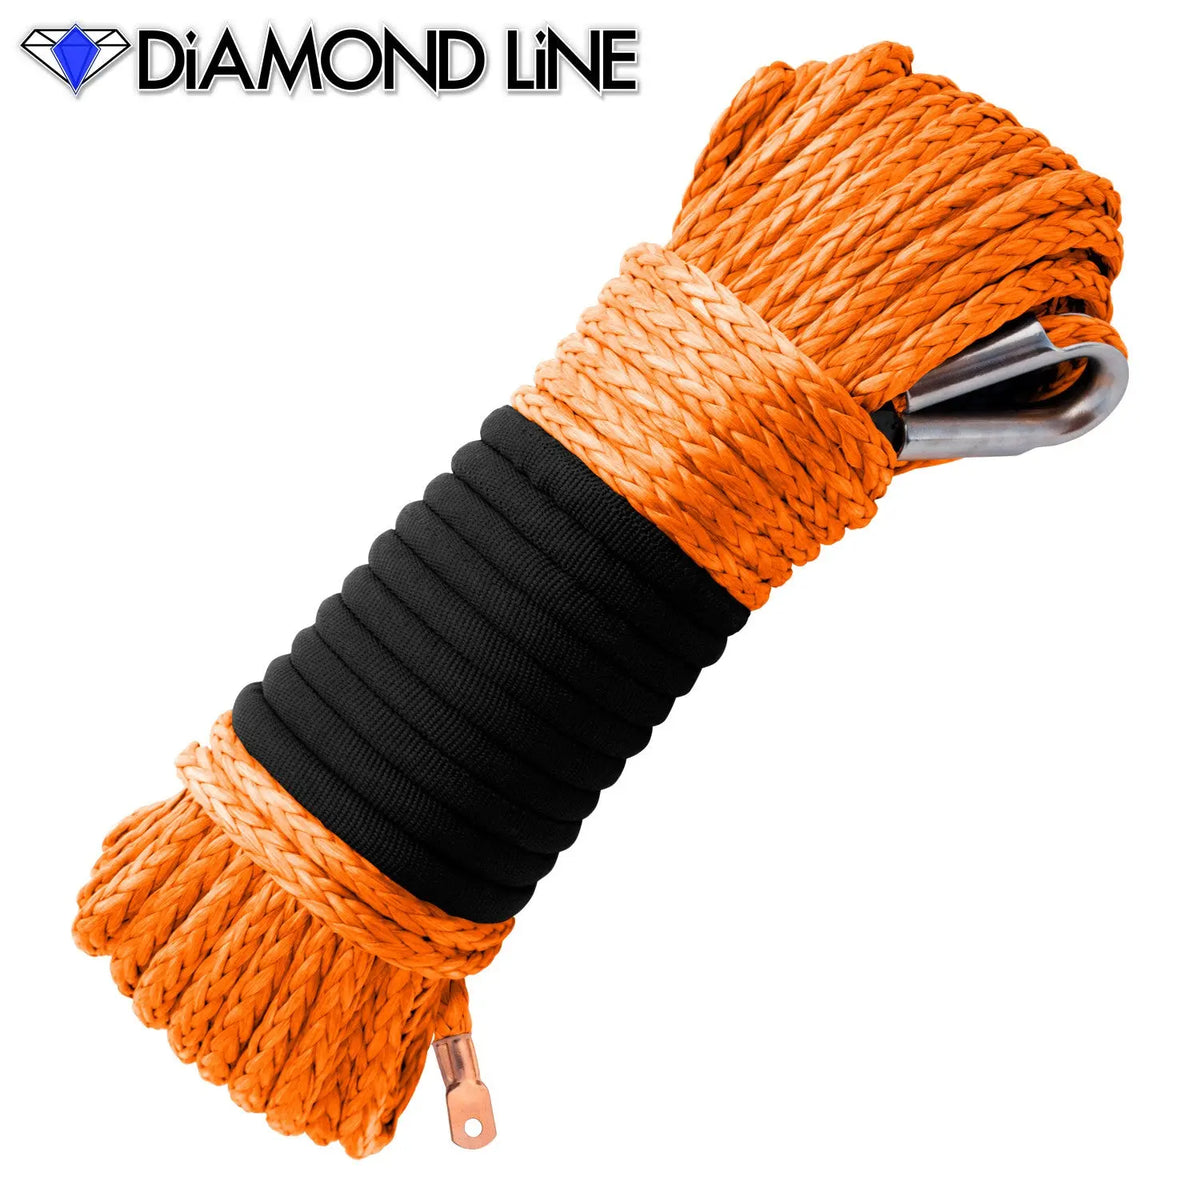 5/16" Diamond Line Winch Rope Mainline - Orange. 